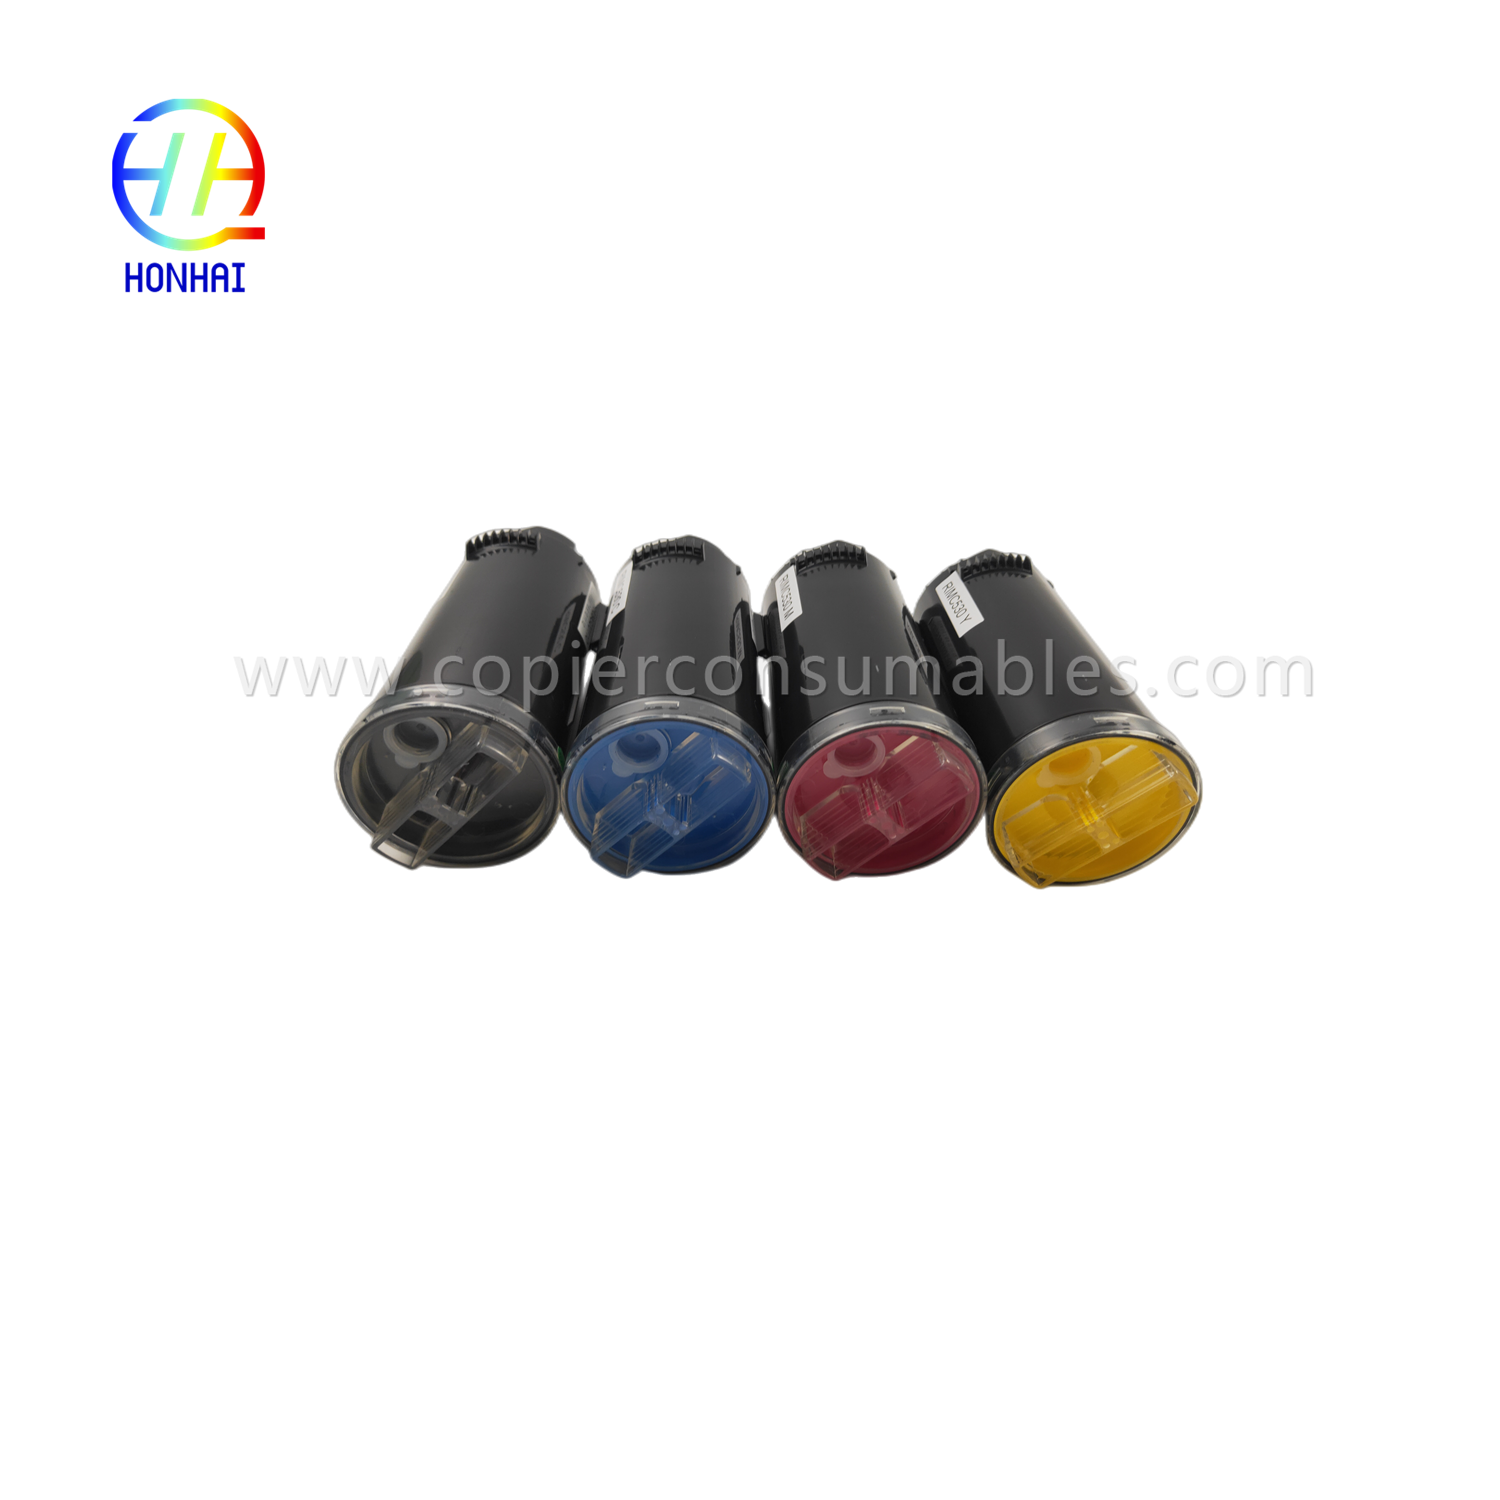 https://c585.goodao.net/toner-cartridge-set-imported-powder-for-ricoh-imc530-imc530f-imc530fb-ref-418240-ref-418241-ref-418242-ref-418243-pro